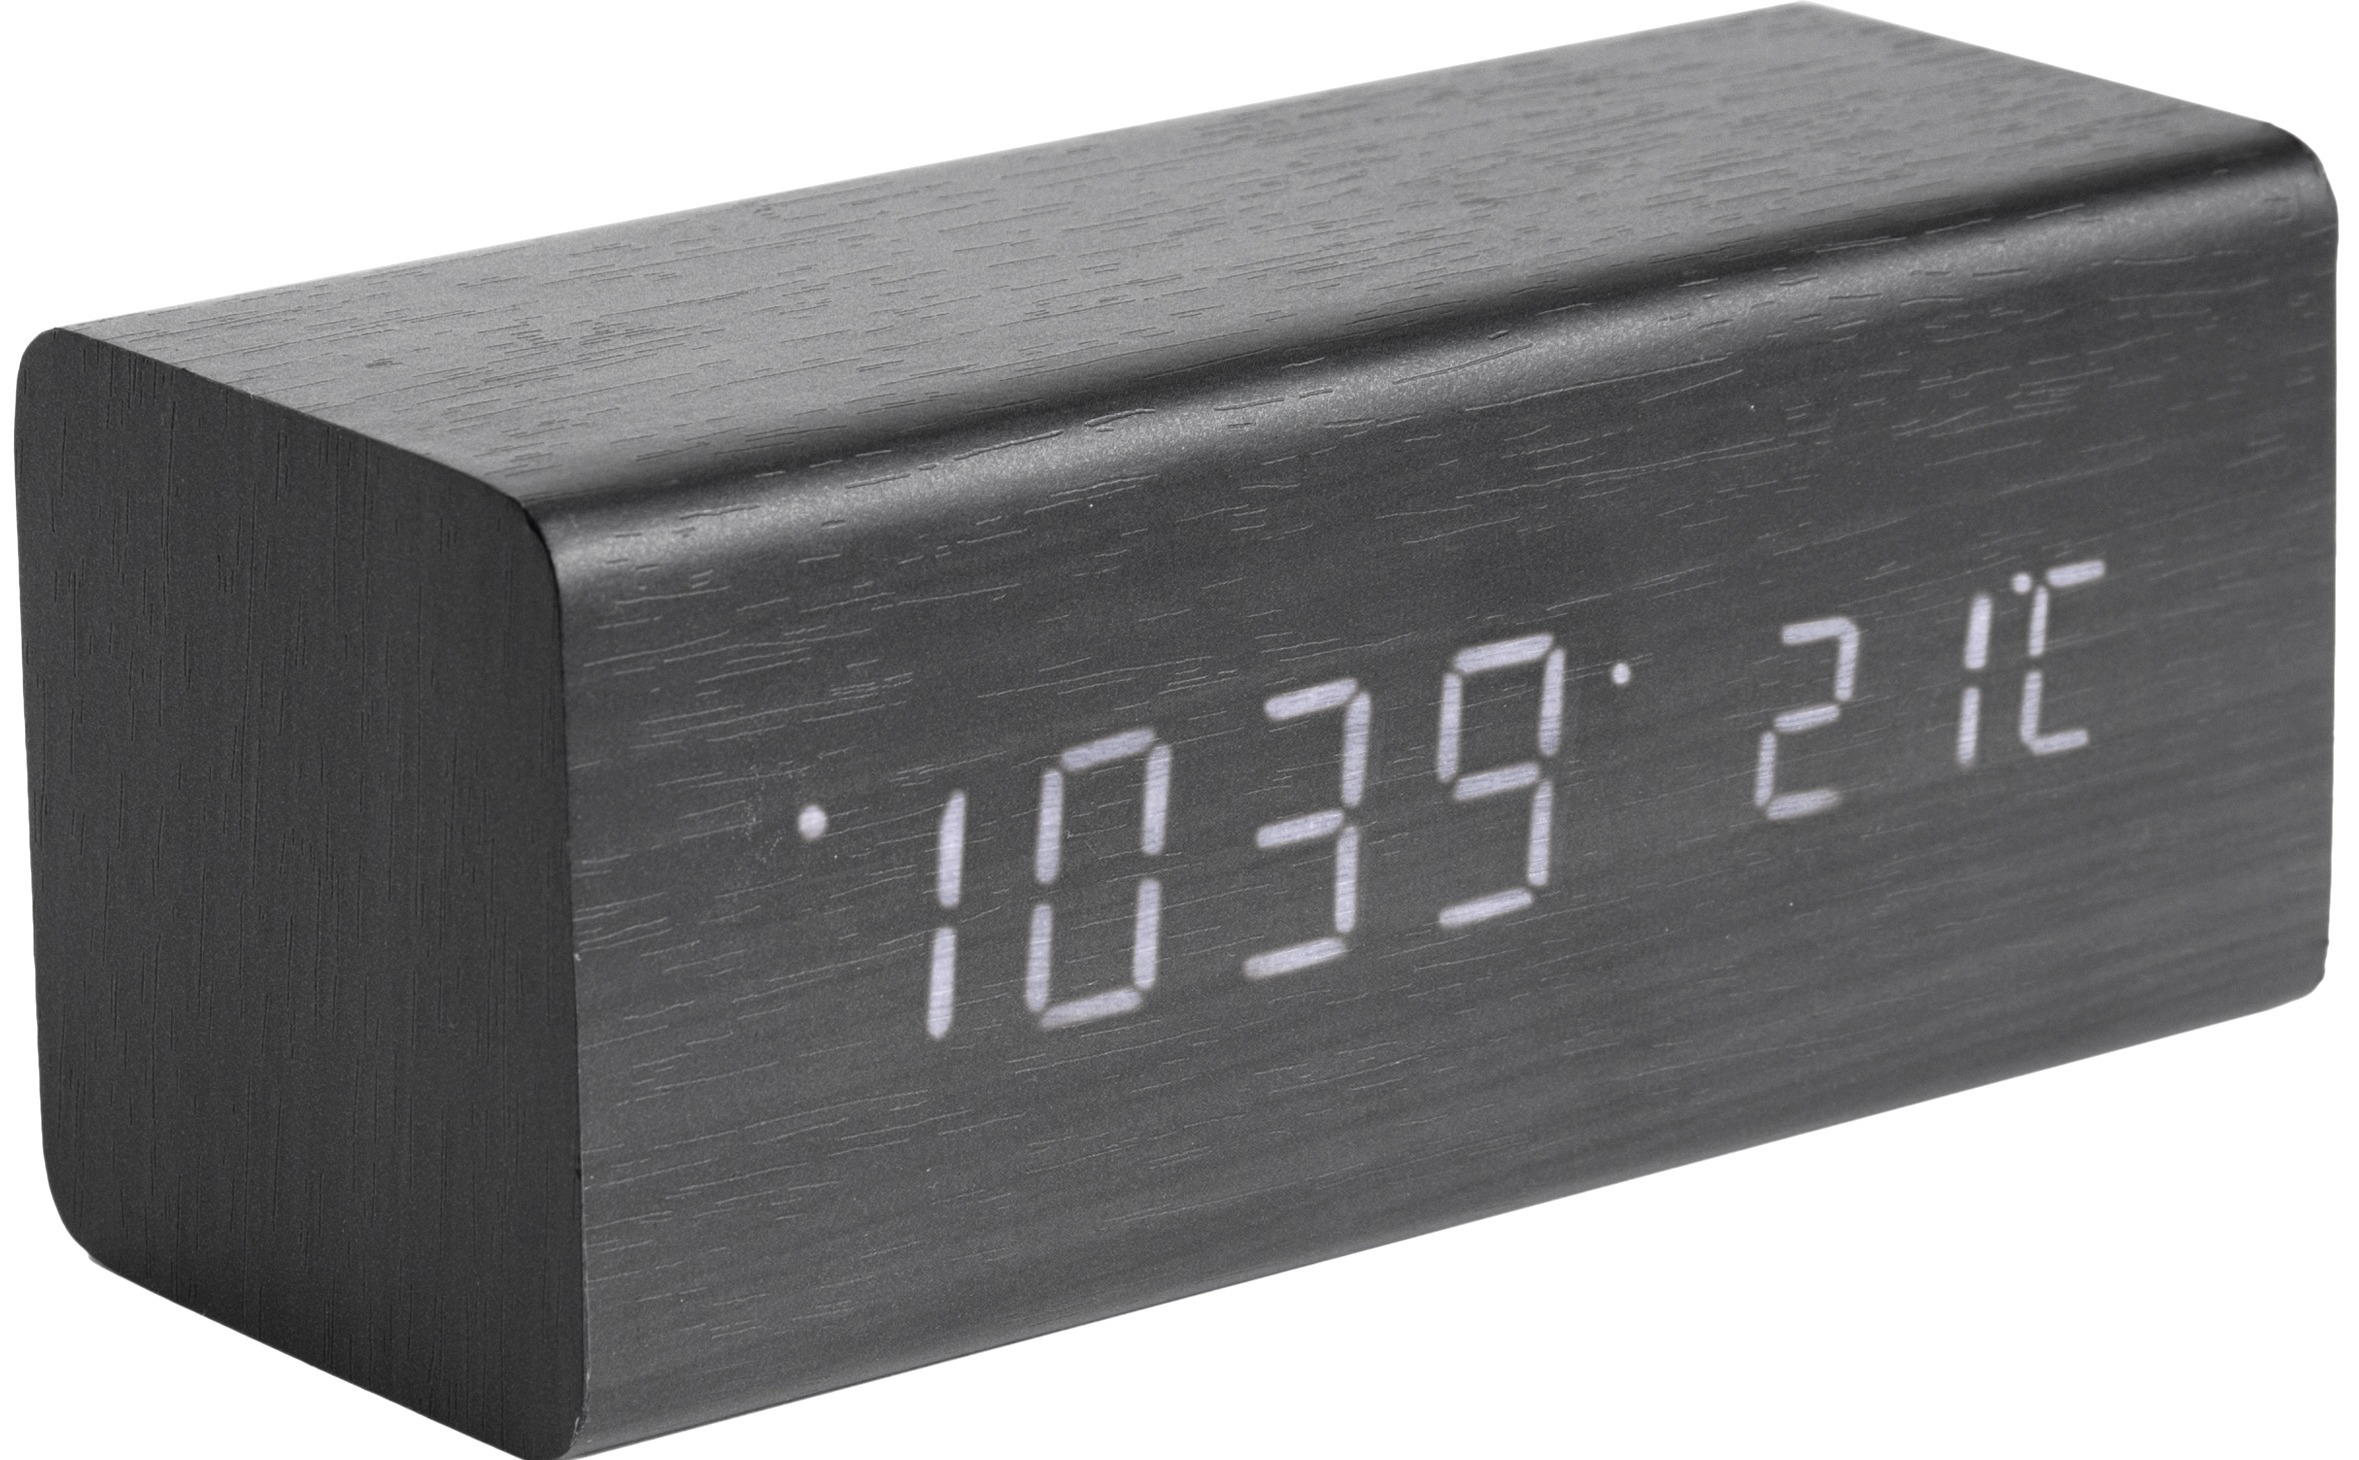 Karlsson Alarm clock Block black veneer